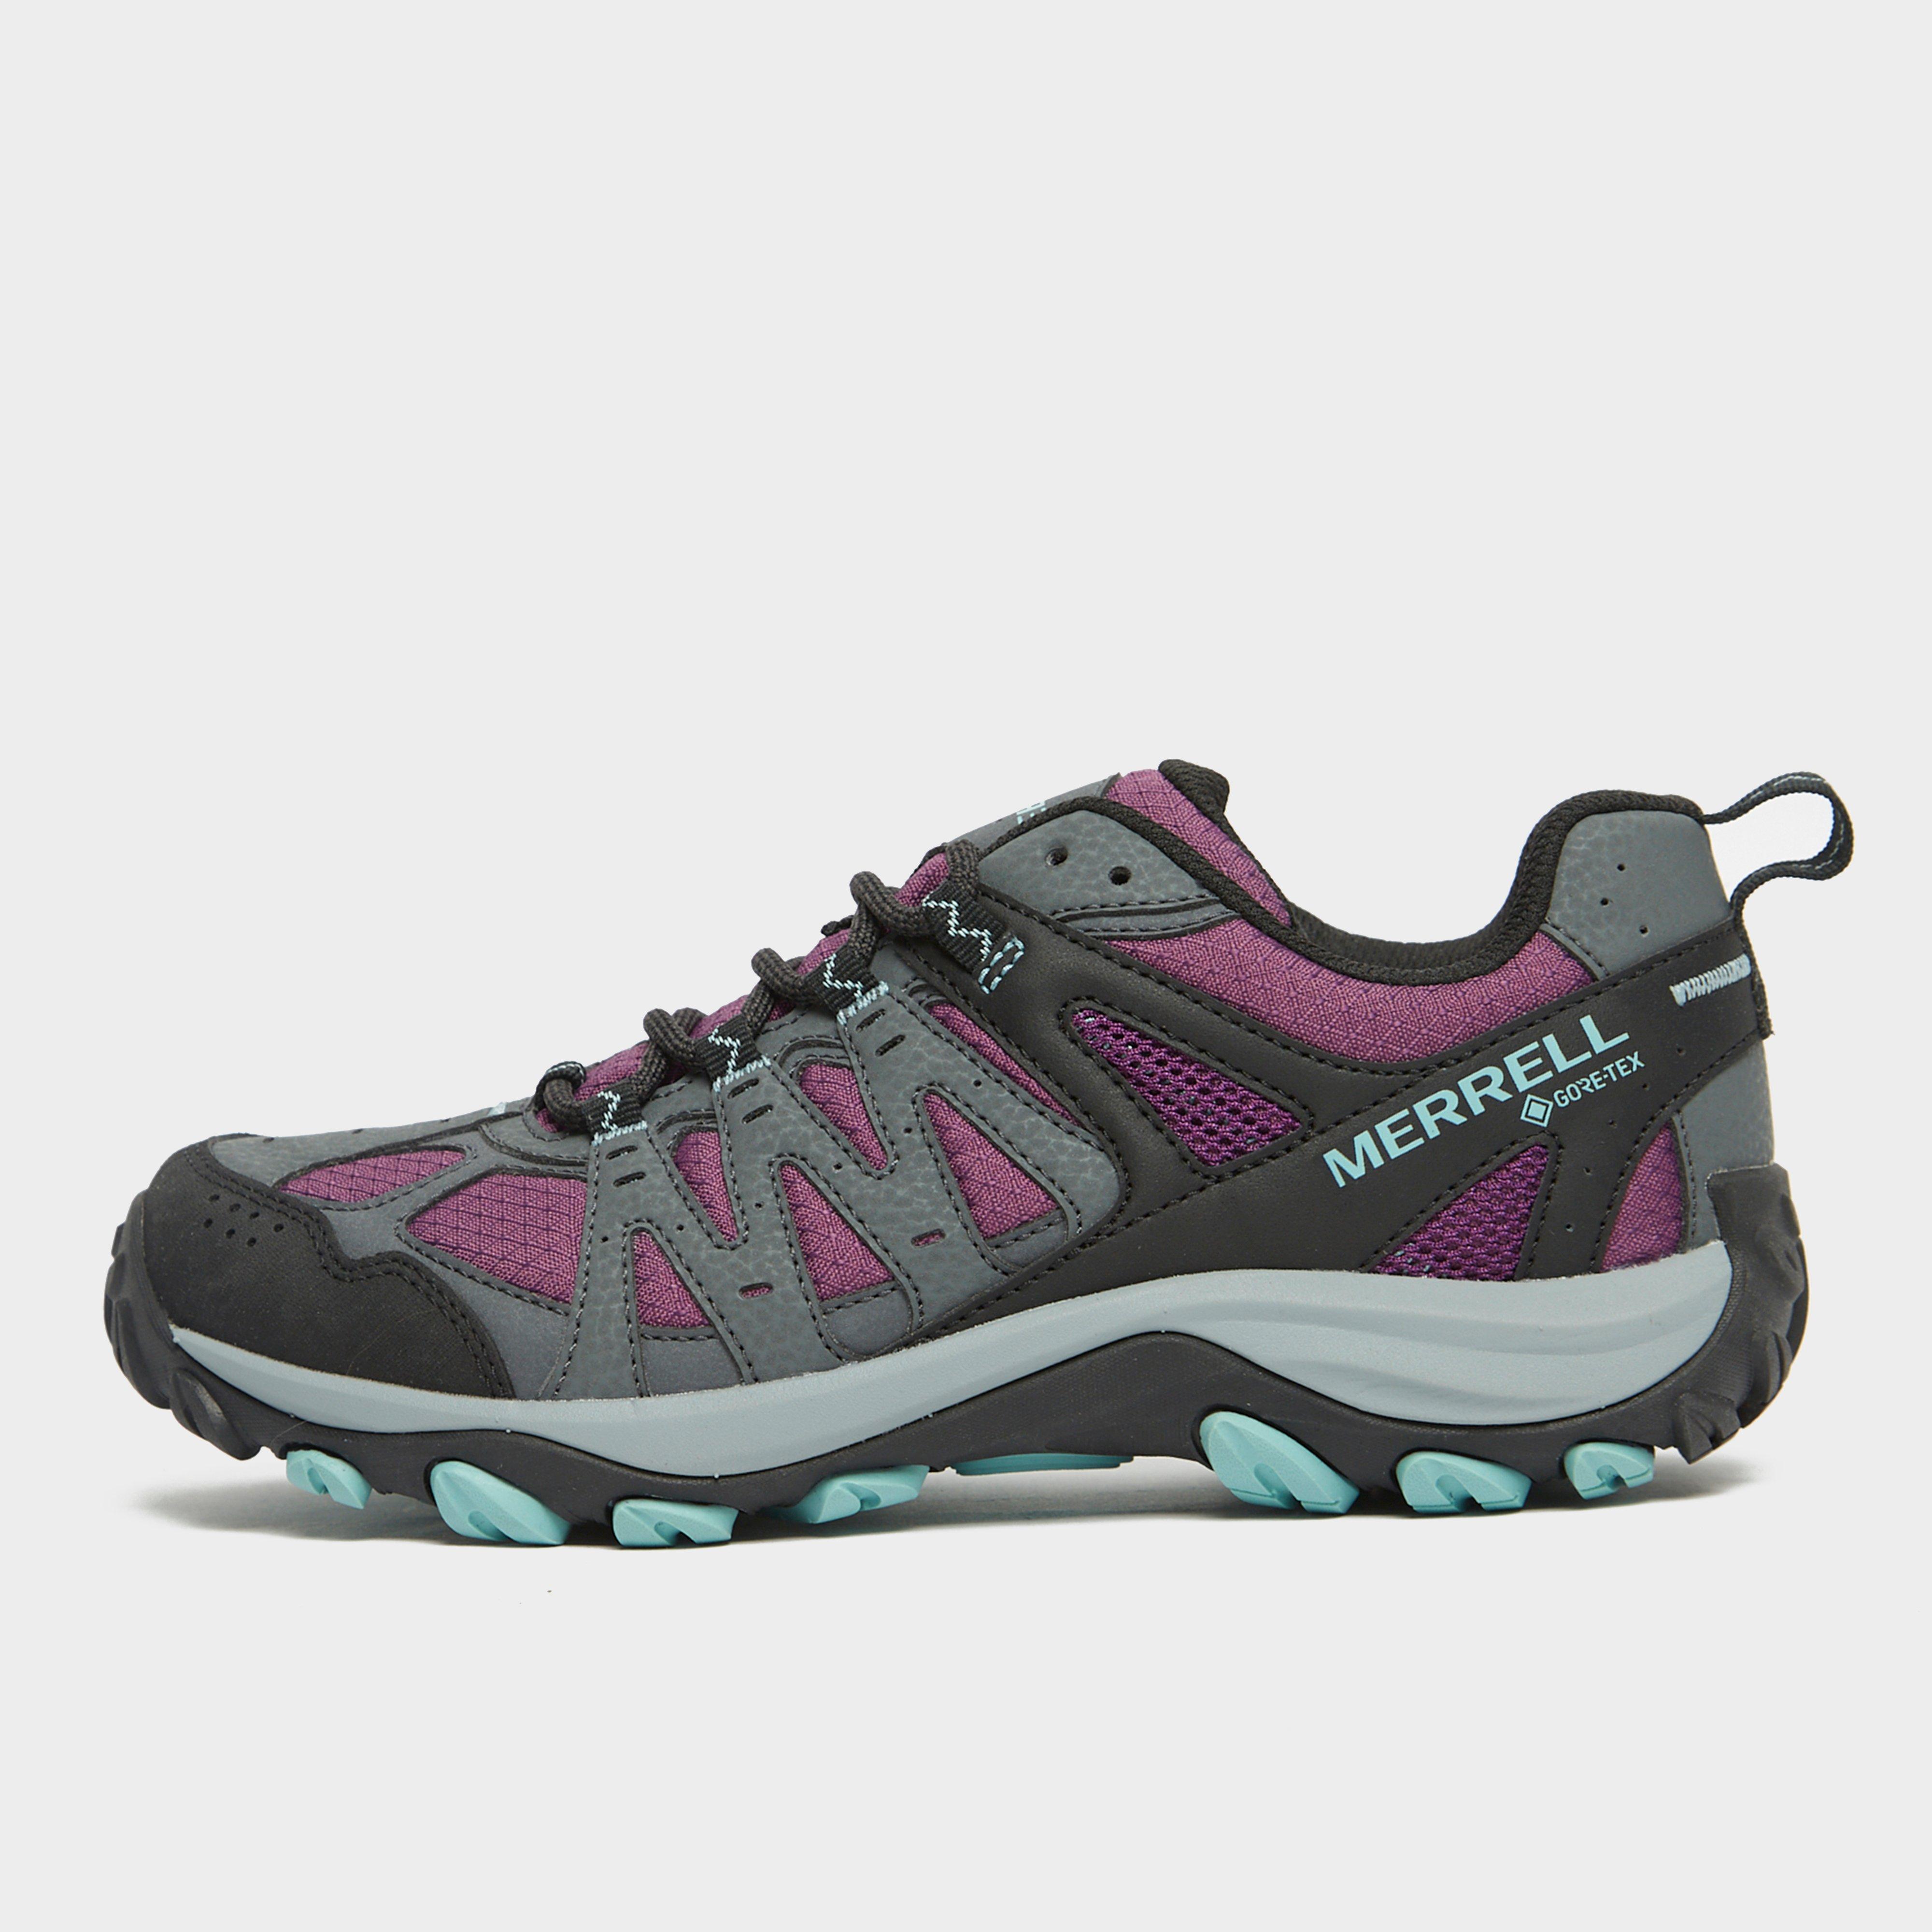 Merrell Women's Accentor 3 GORE-TEX Walking Shoe, Purple